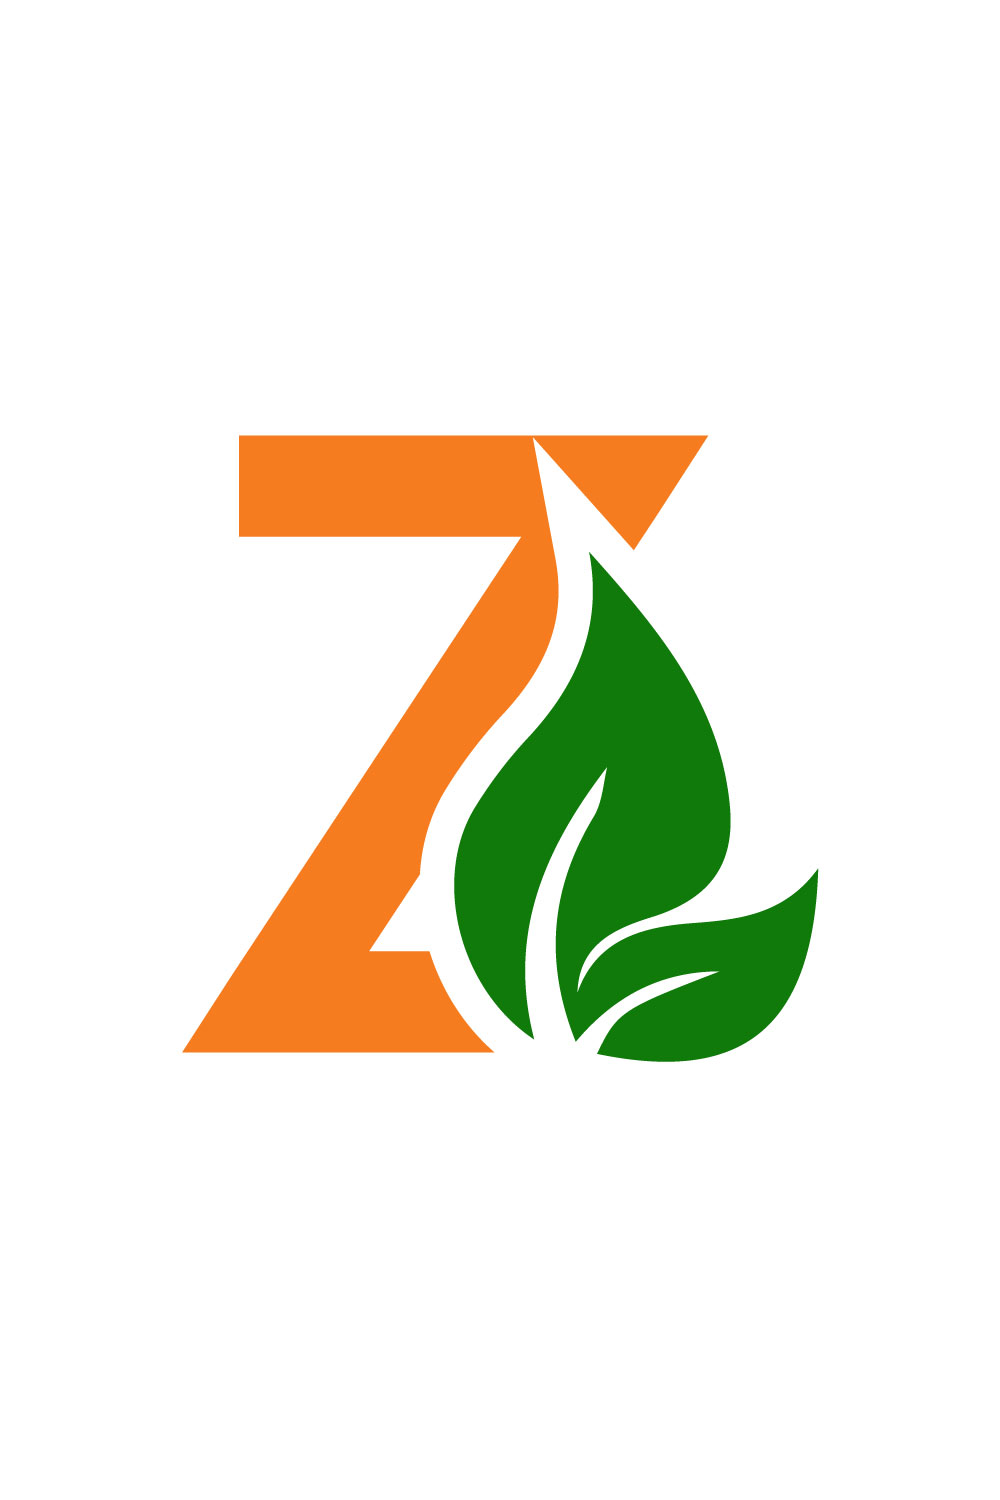 Free Z company branding Logo pinterest preview image.